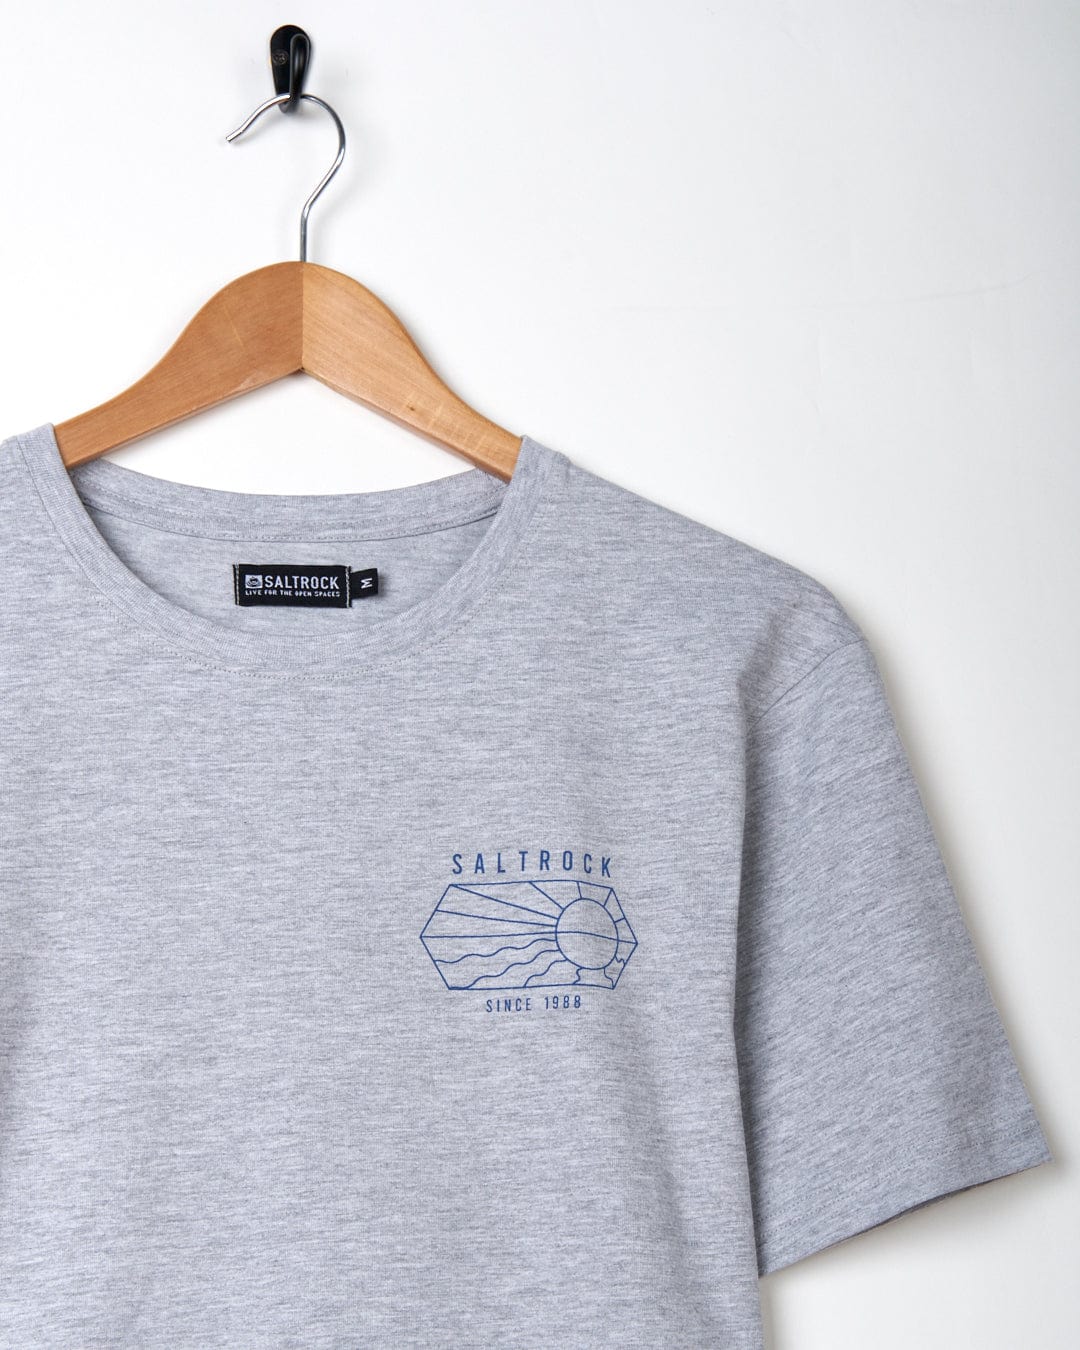 A grey Vantage Outline - Mens Short Sleeve T-Shirt - Grey Marl with a blue Saltrock branding logo on it.